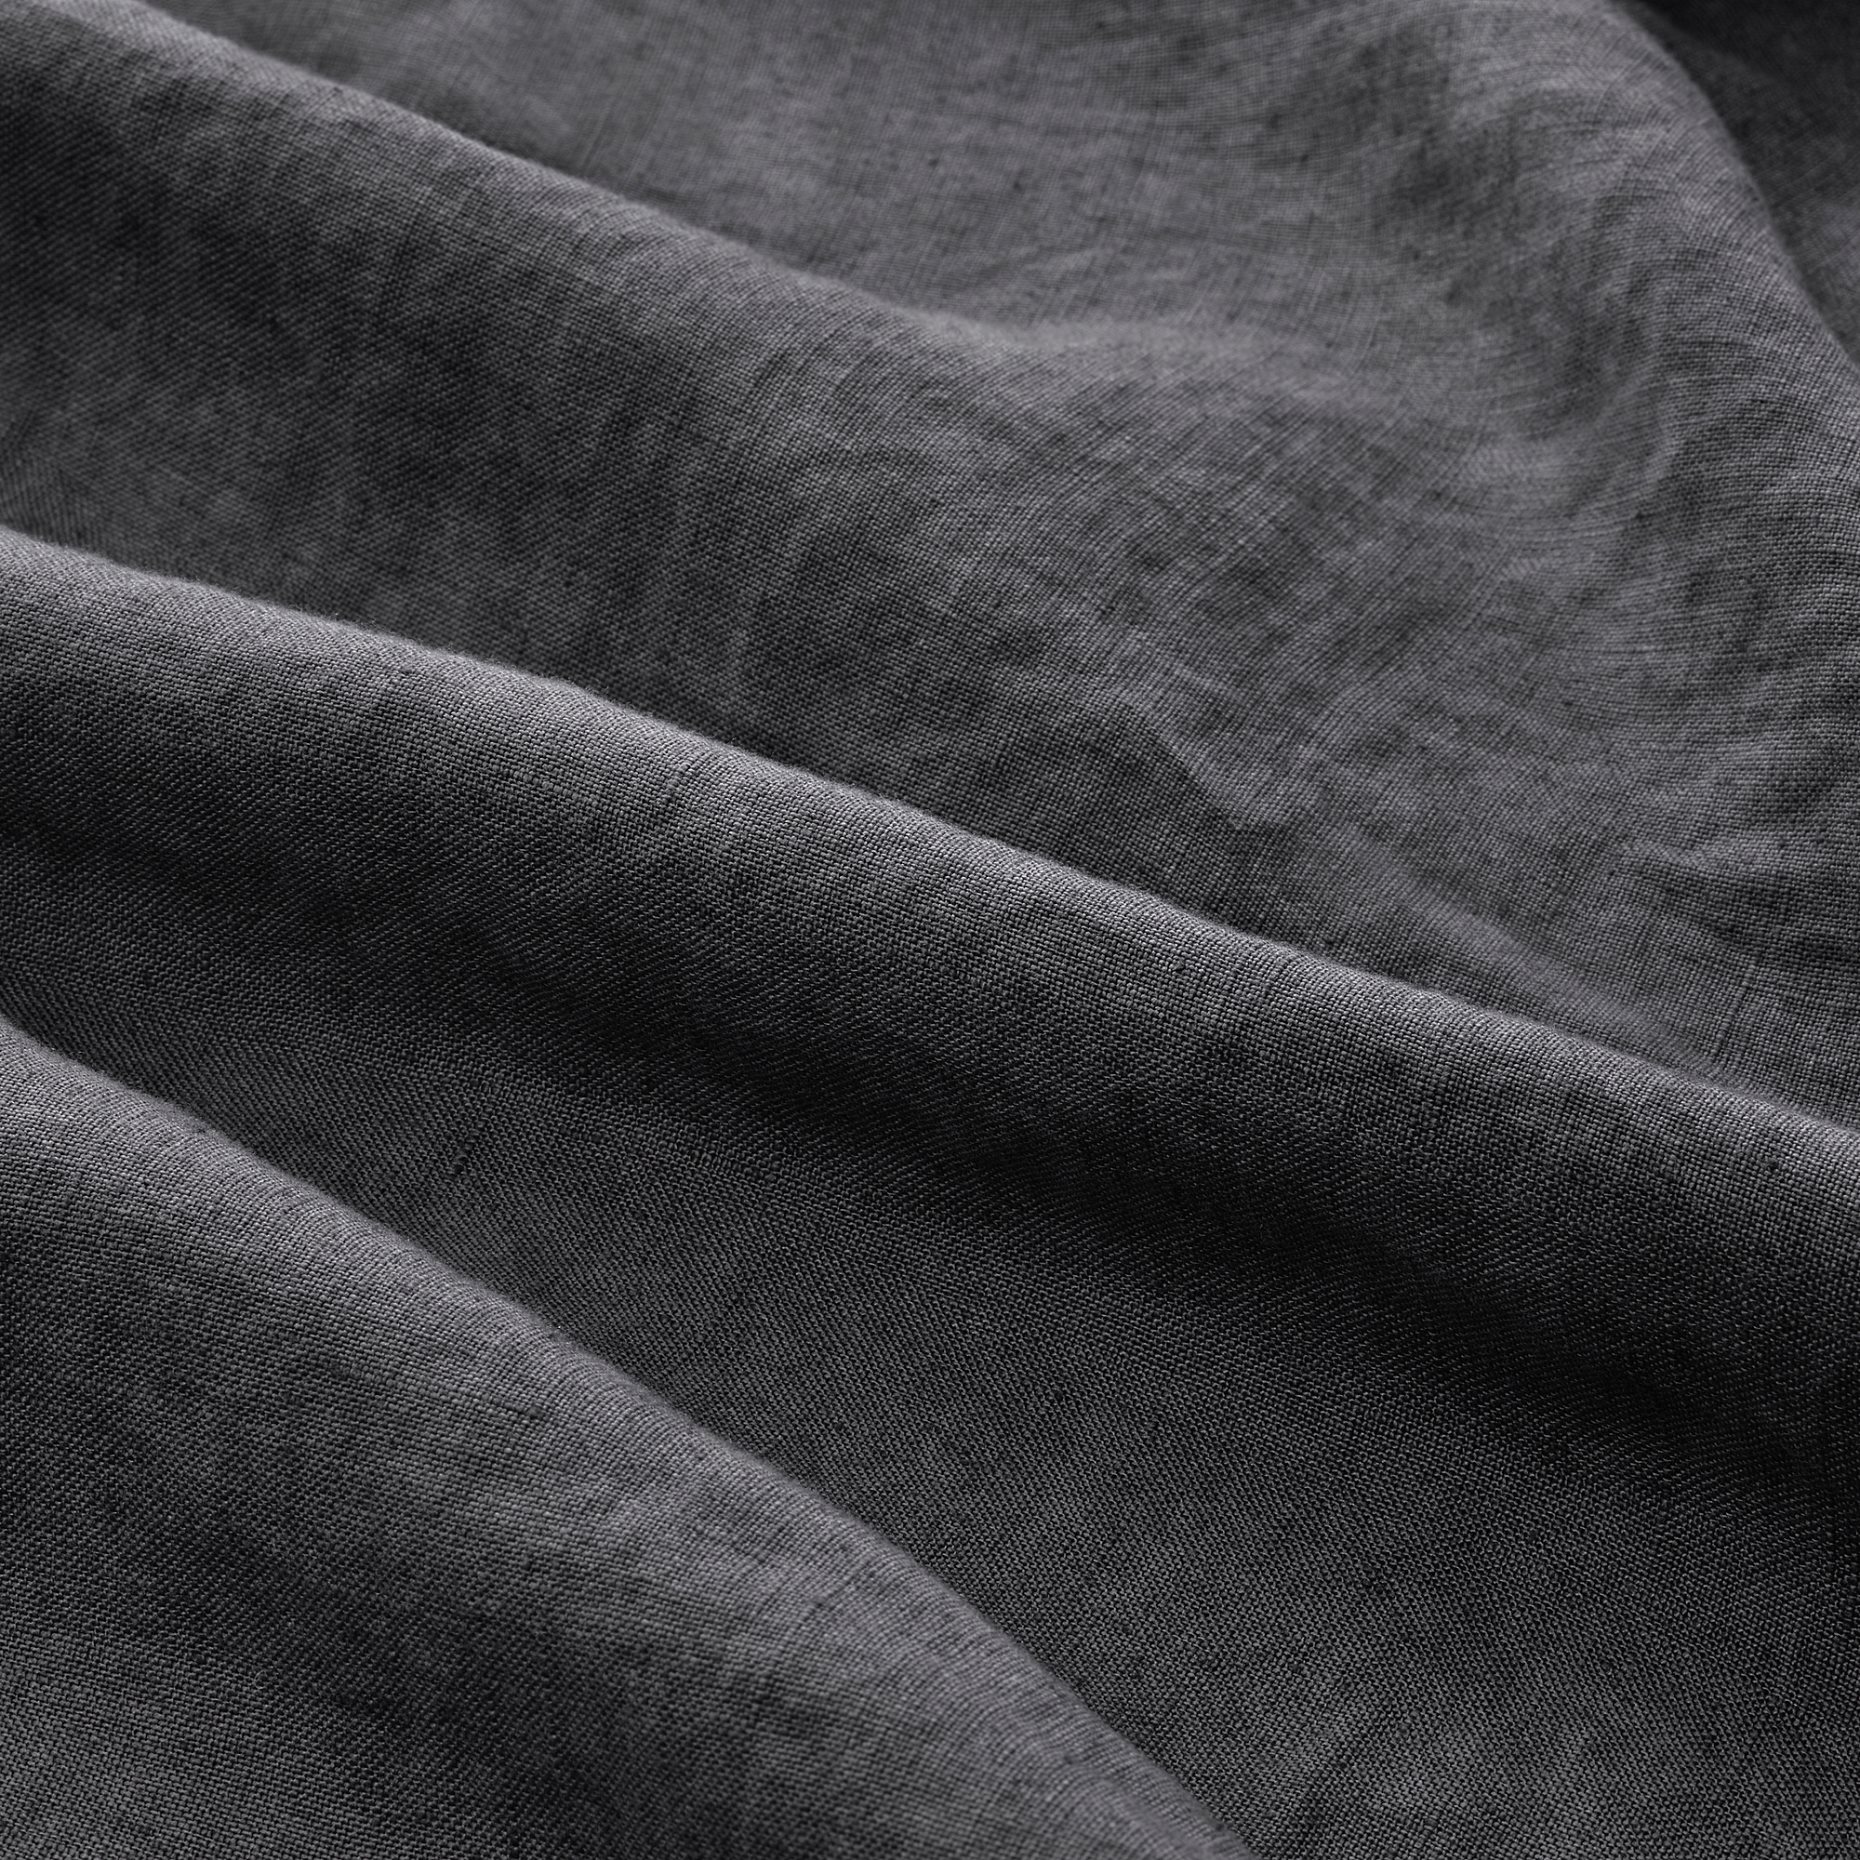 DYTÅG, duvet cover and 2 pillowcases, 240x220/50x60 cm, 005.188.04